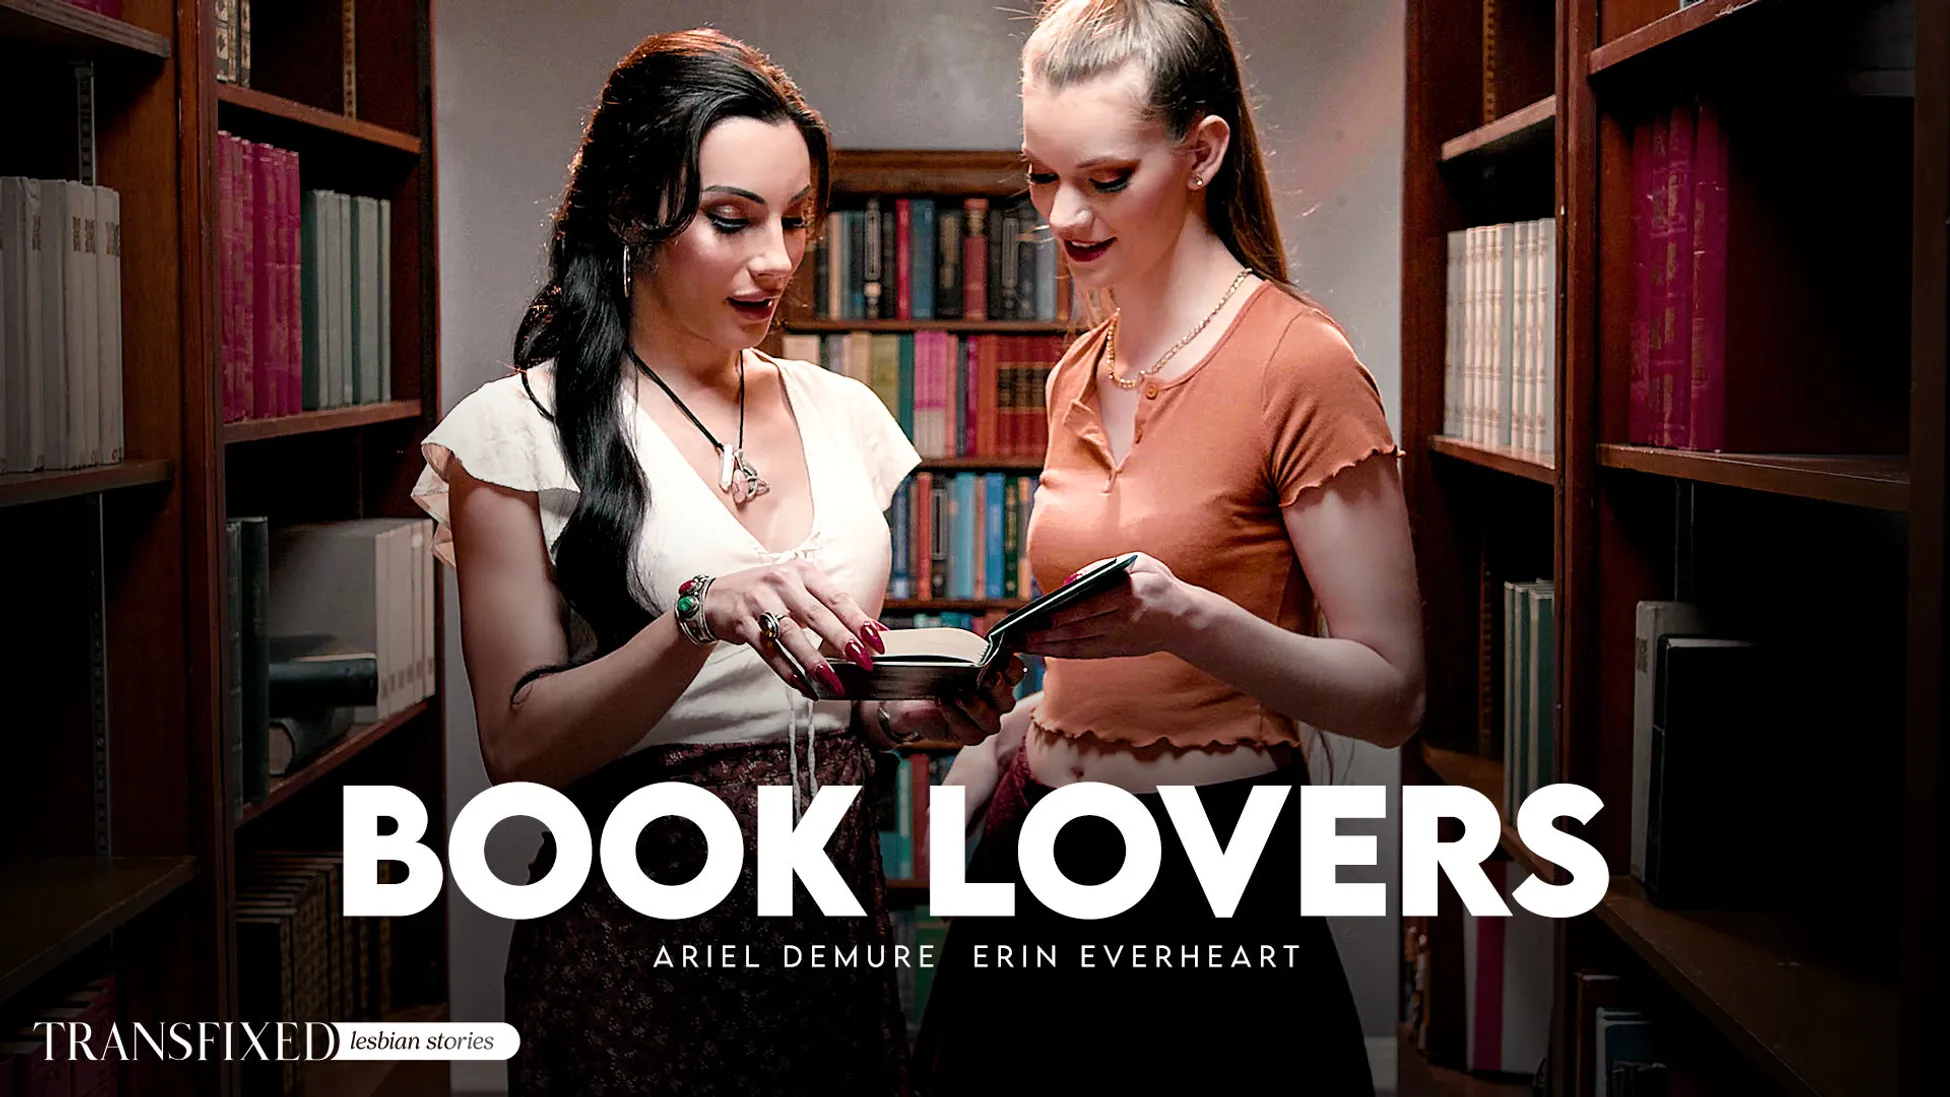 Shemale Fucks Shelf - Transfixed â€“ Book Lovers - Erin Everheart & Ariel Demure - ShemaleDreamTube